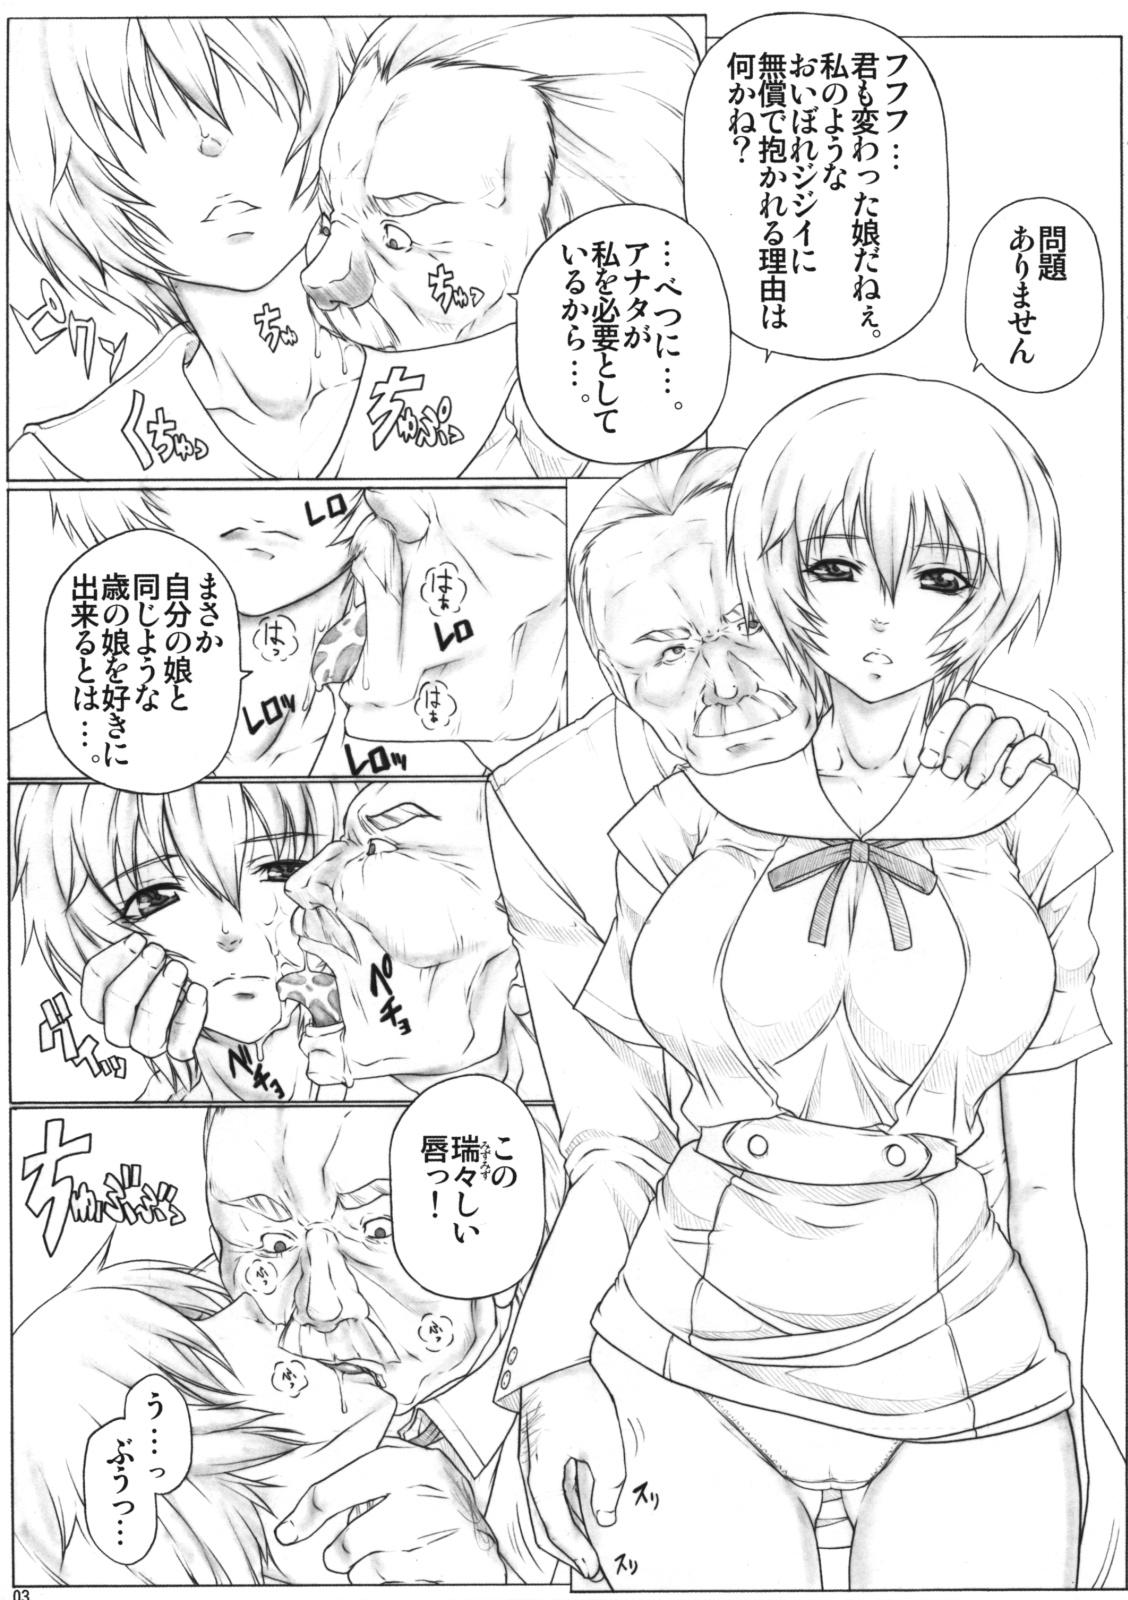 Pretty Angel's stroke 32 - Nyuuka Shoujo - Neon genesis evangelion Anime - Page 4